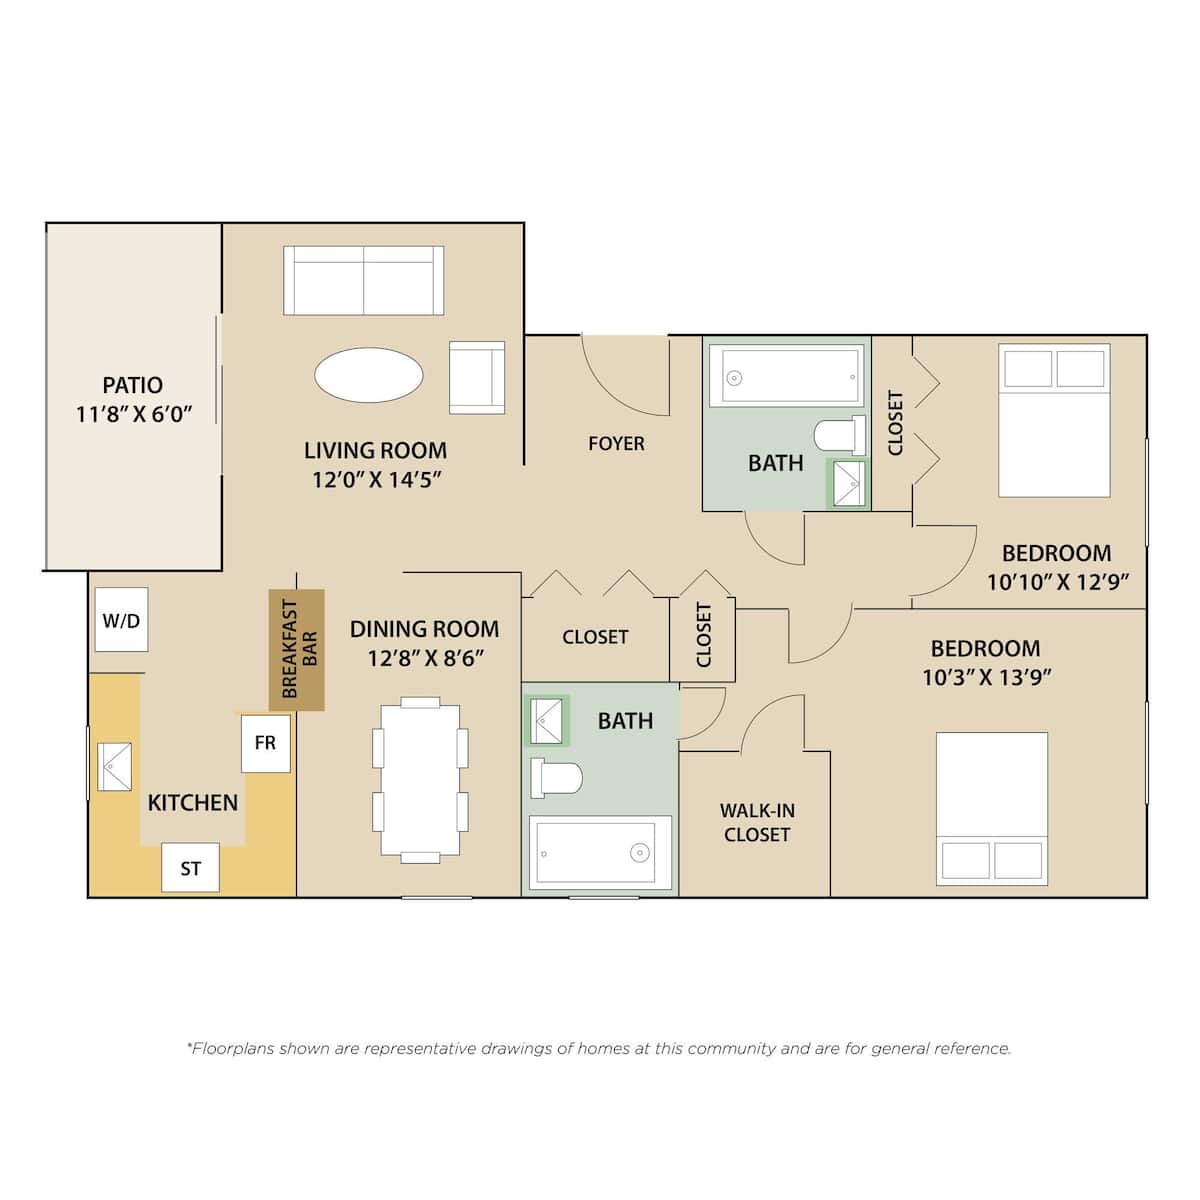 Floorplan diagram for 2 Bedroom / 2 Bath - R, showing 2 bedroom